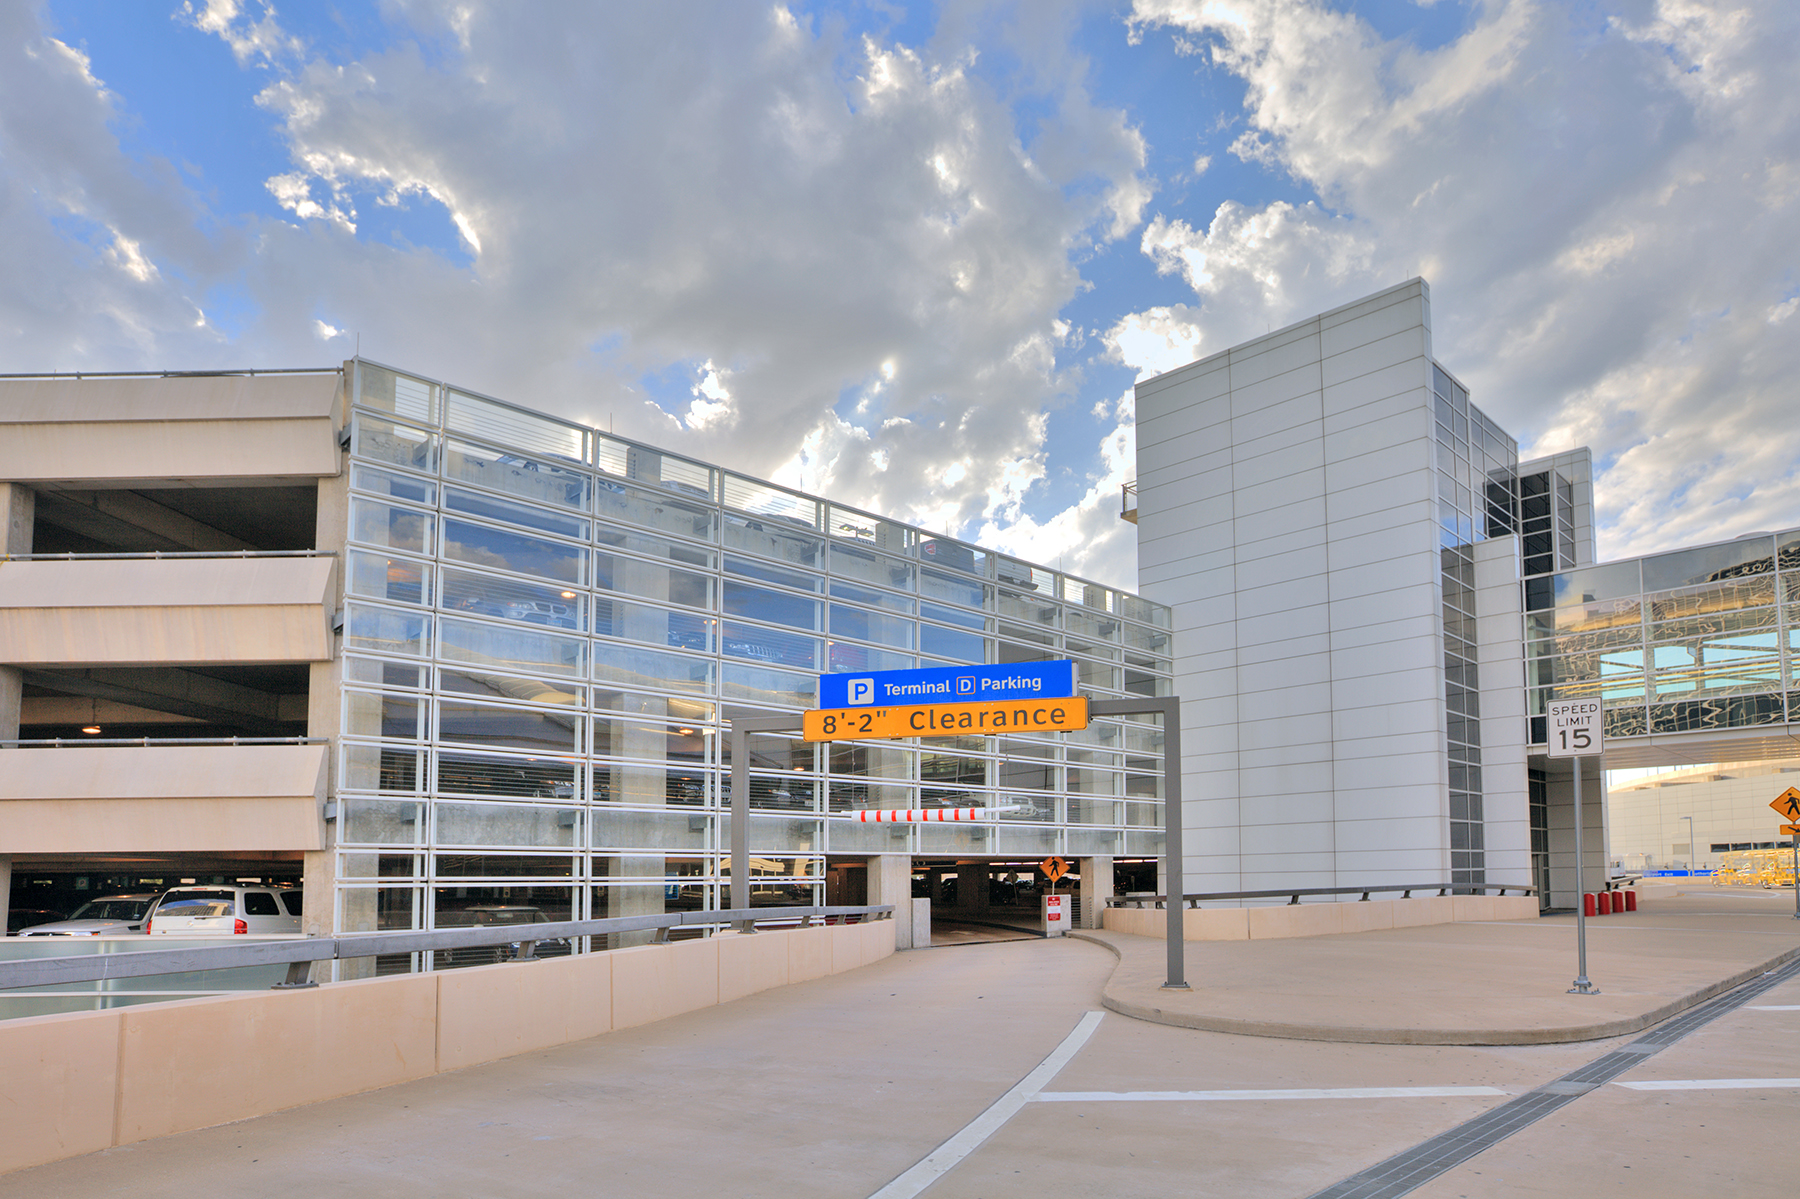 DFW International Airport